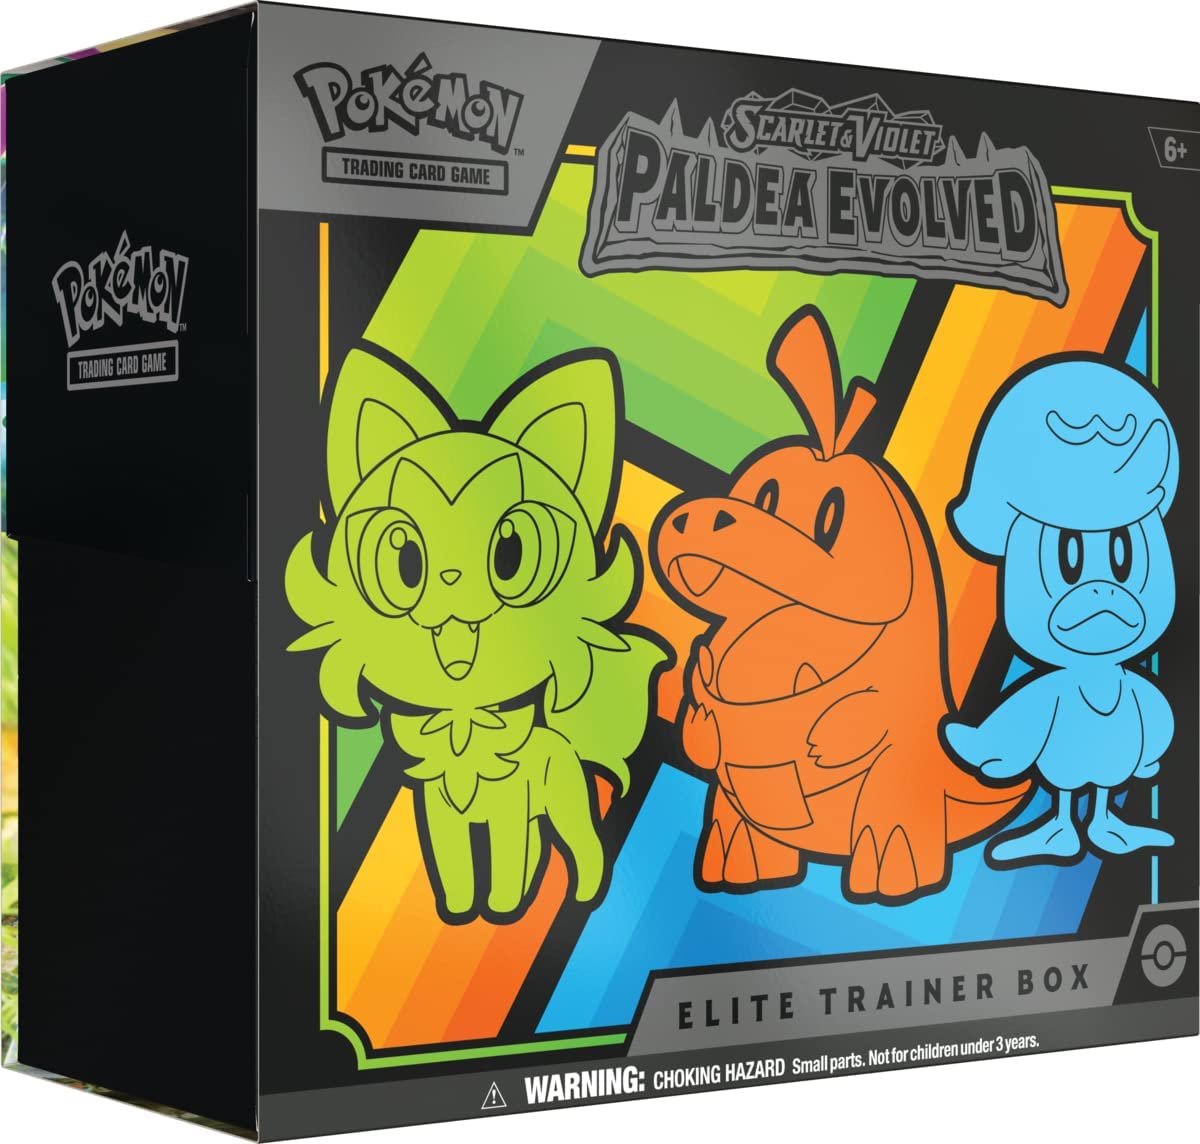 Pokemon Trading Card Game Paldea Evolved Elite Trainer Box